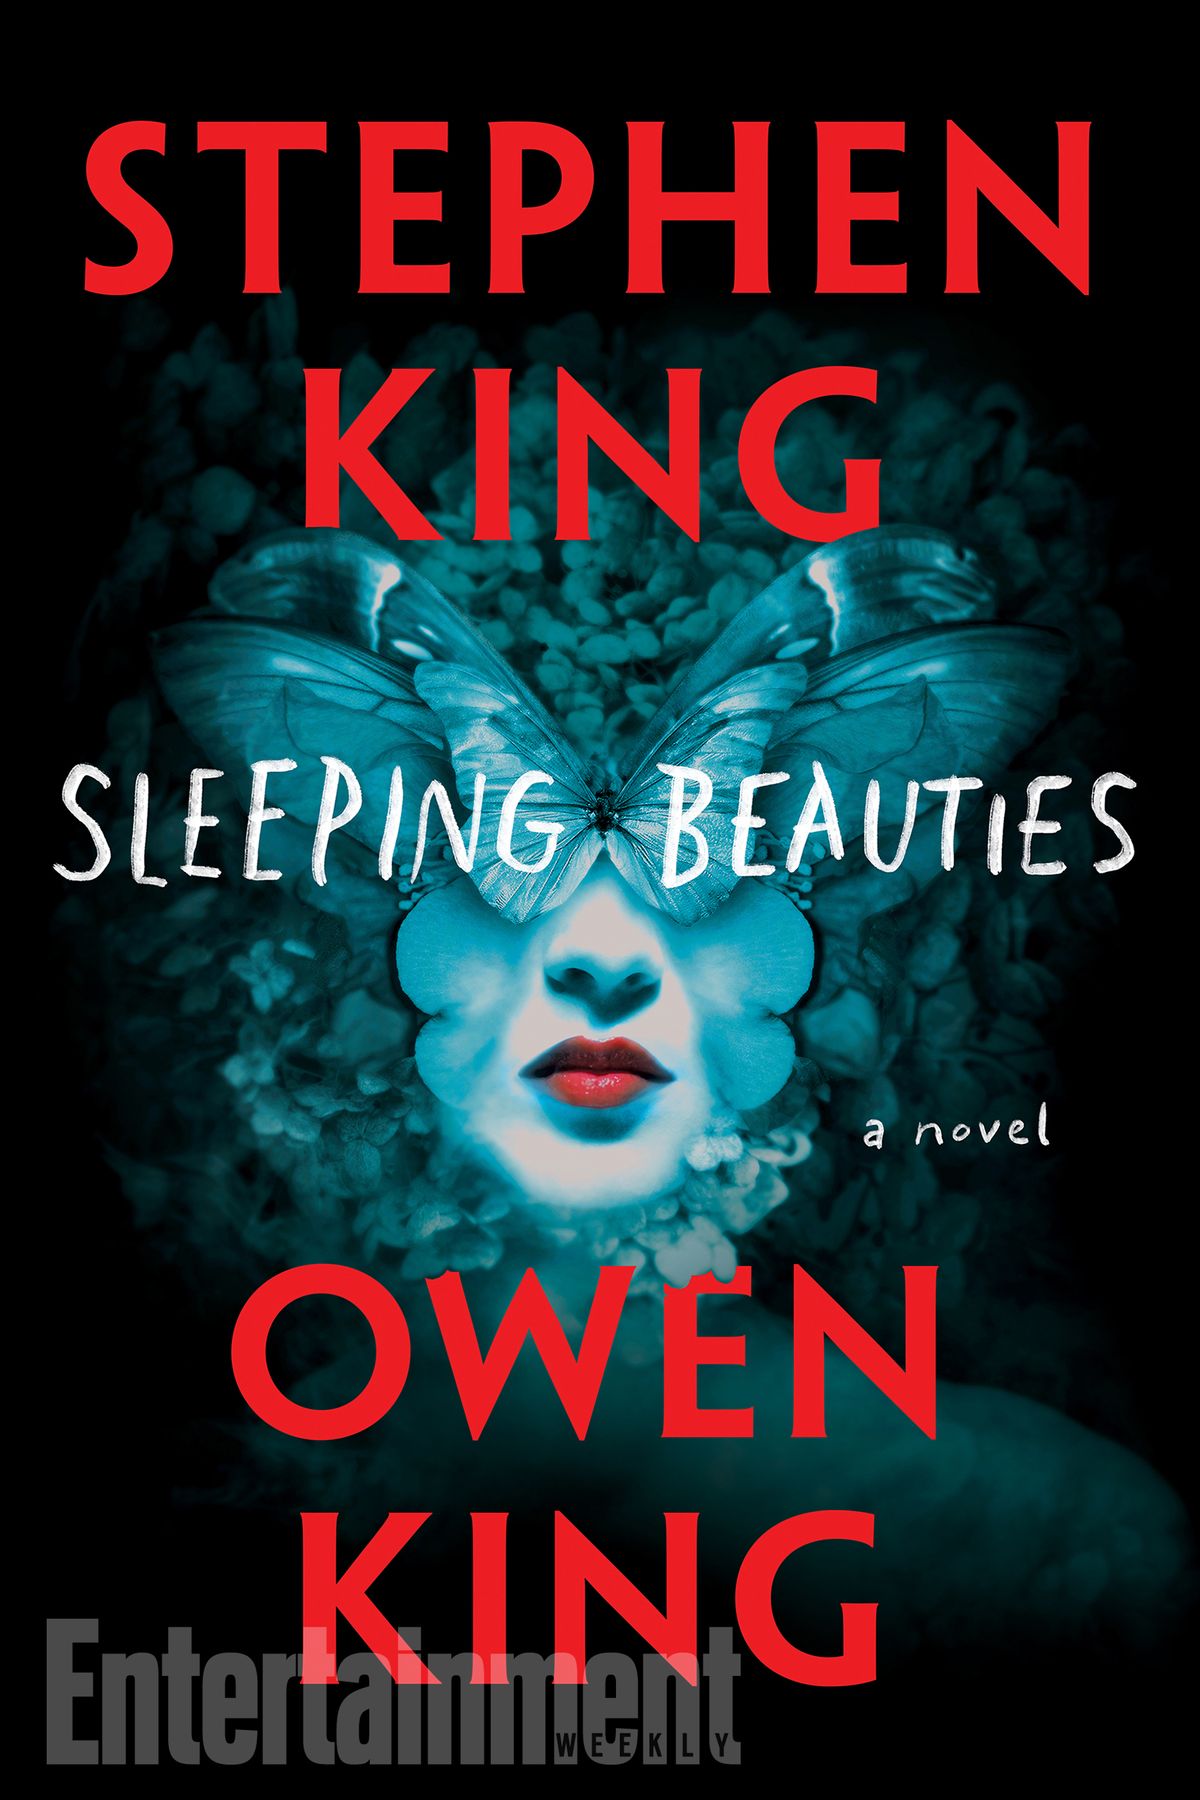 A New Novel From Stephen King: Sleeping Beauties